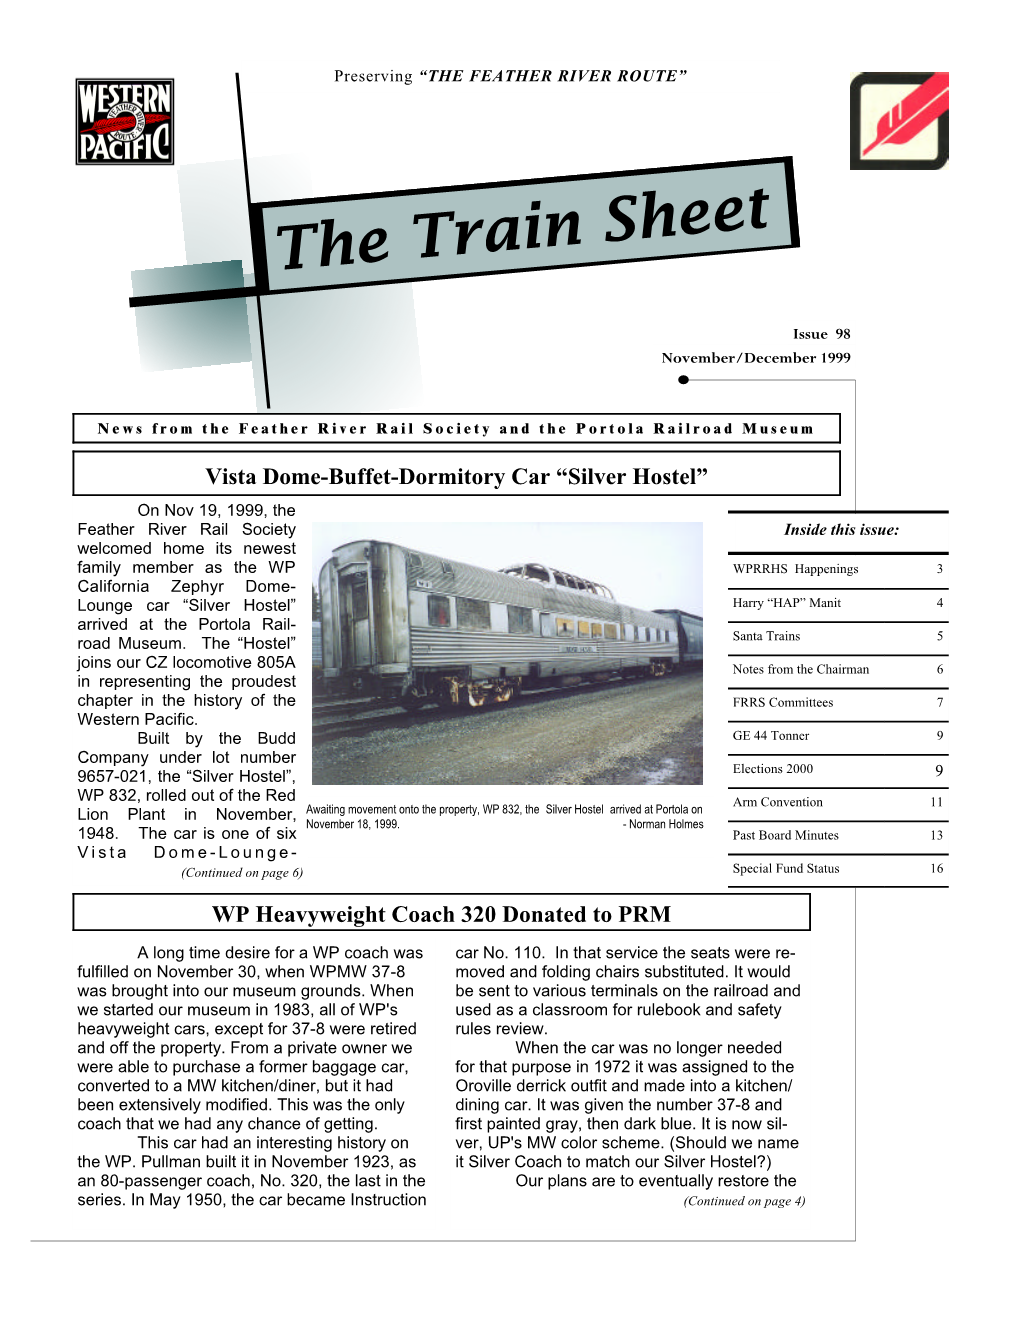 Train Sheet #98 November/December 1999